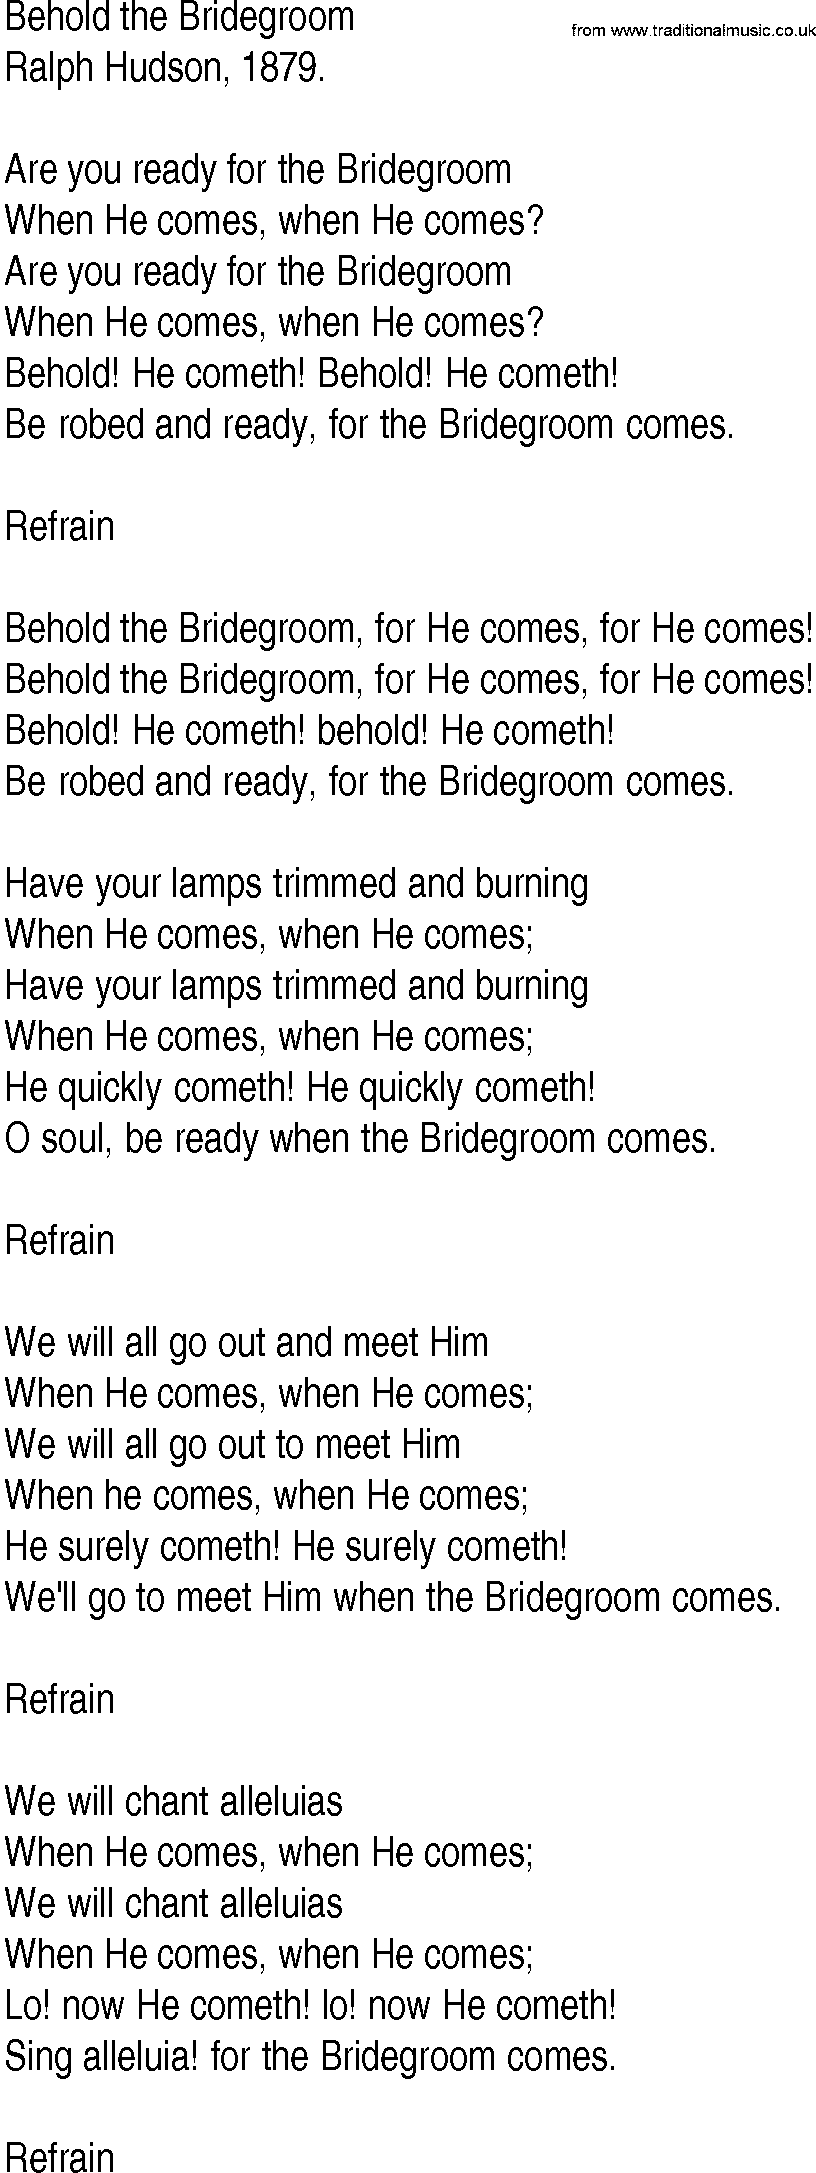 Hymn and Gospel Song: Behold the Bridegroom by Ralph Hudson lyrics